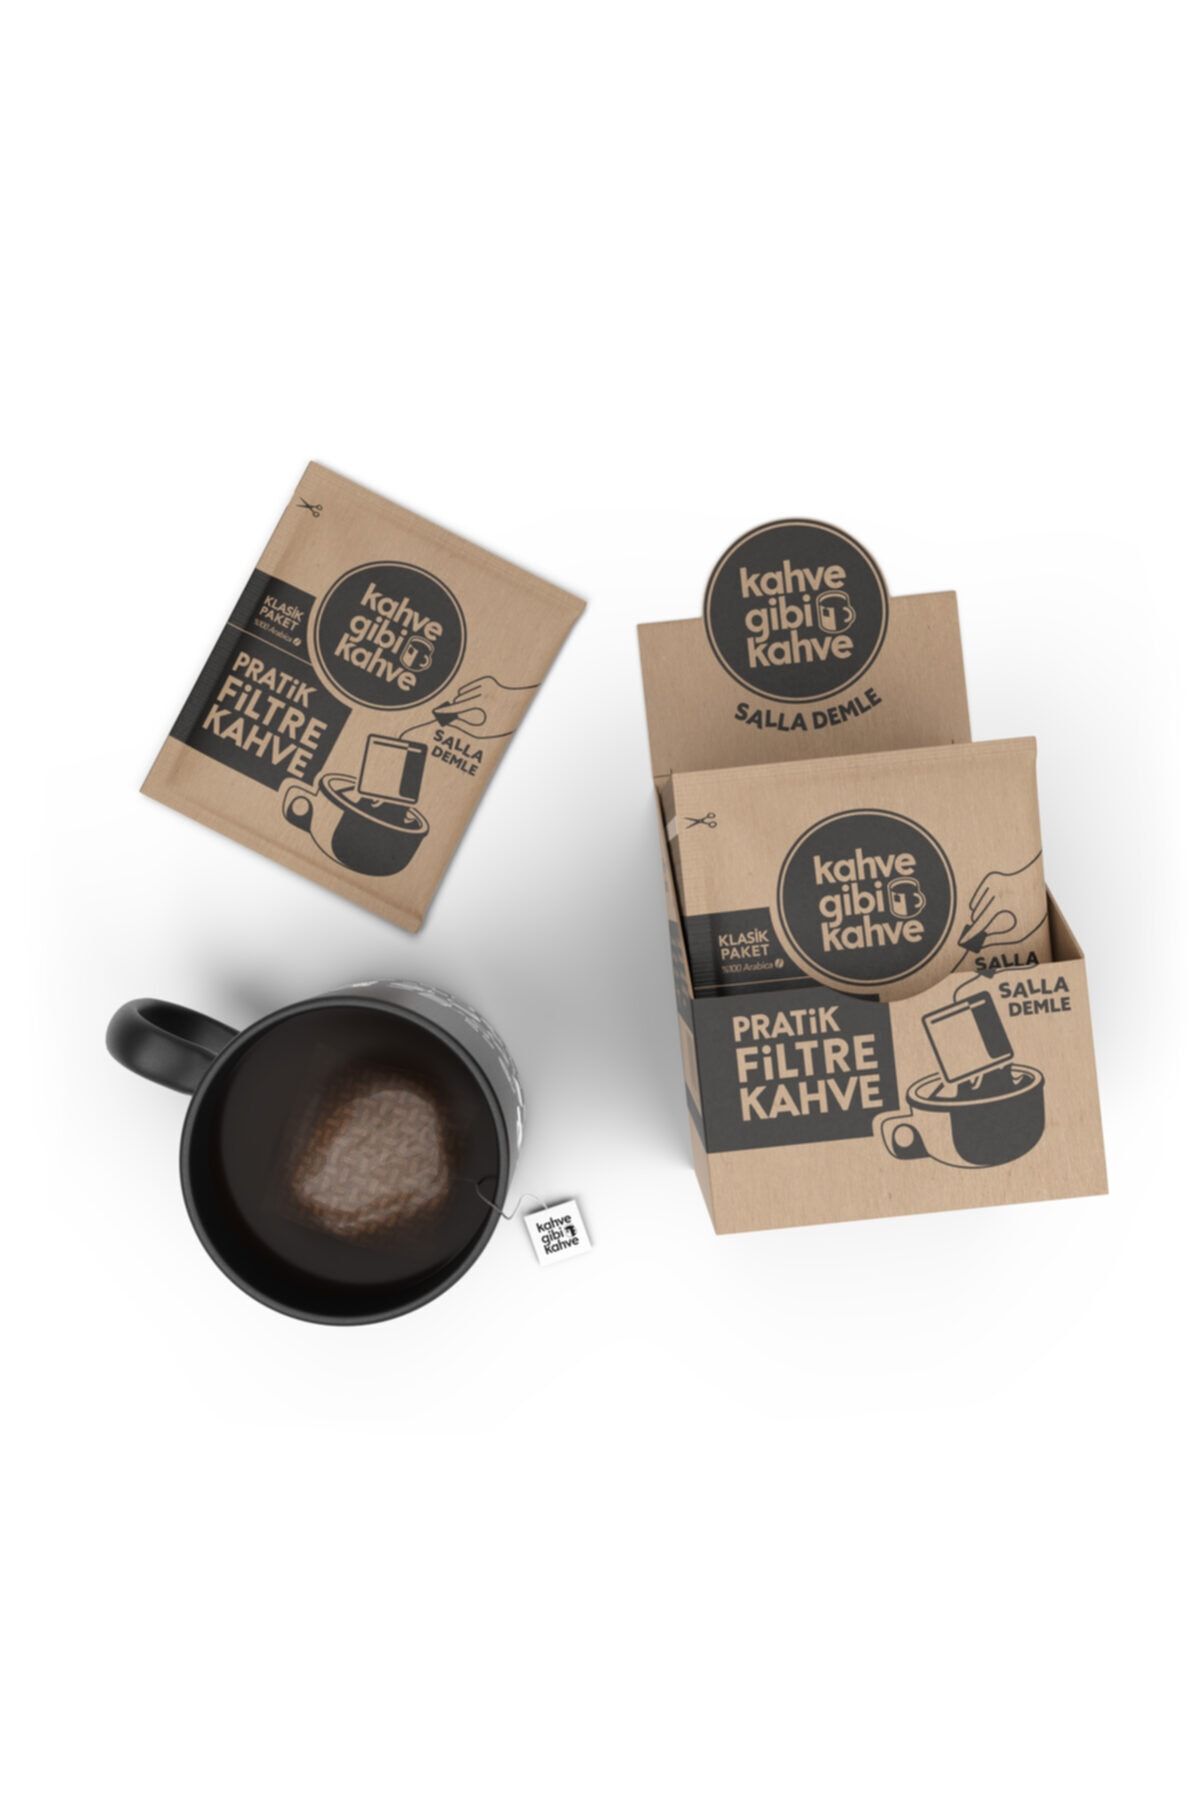 Kahvegibikahve Pratik Filtre Kahve - 10'lu Klasik Paket